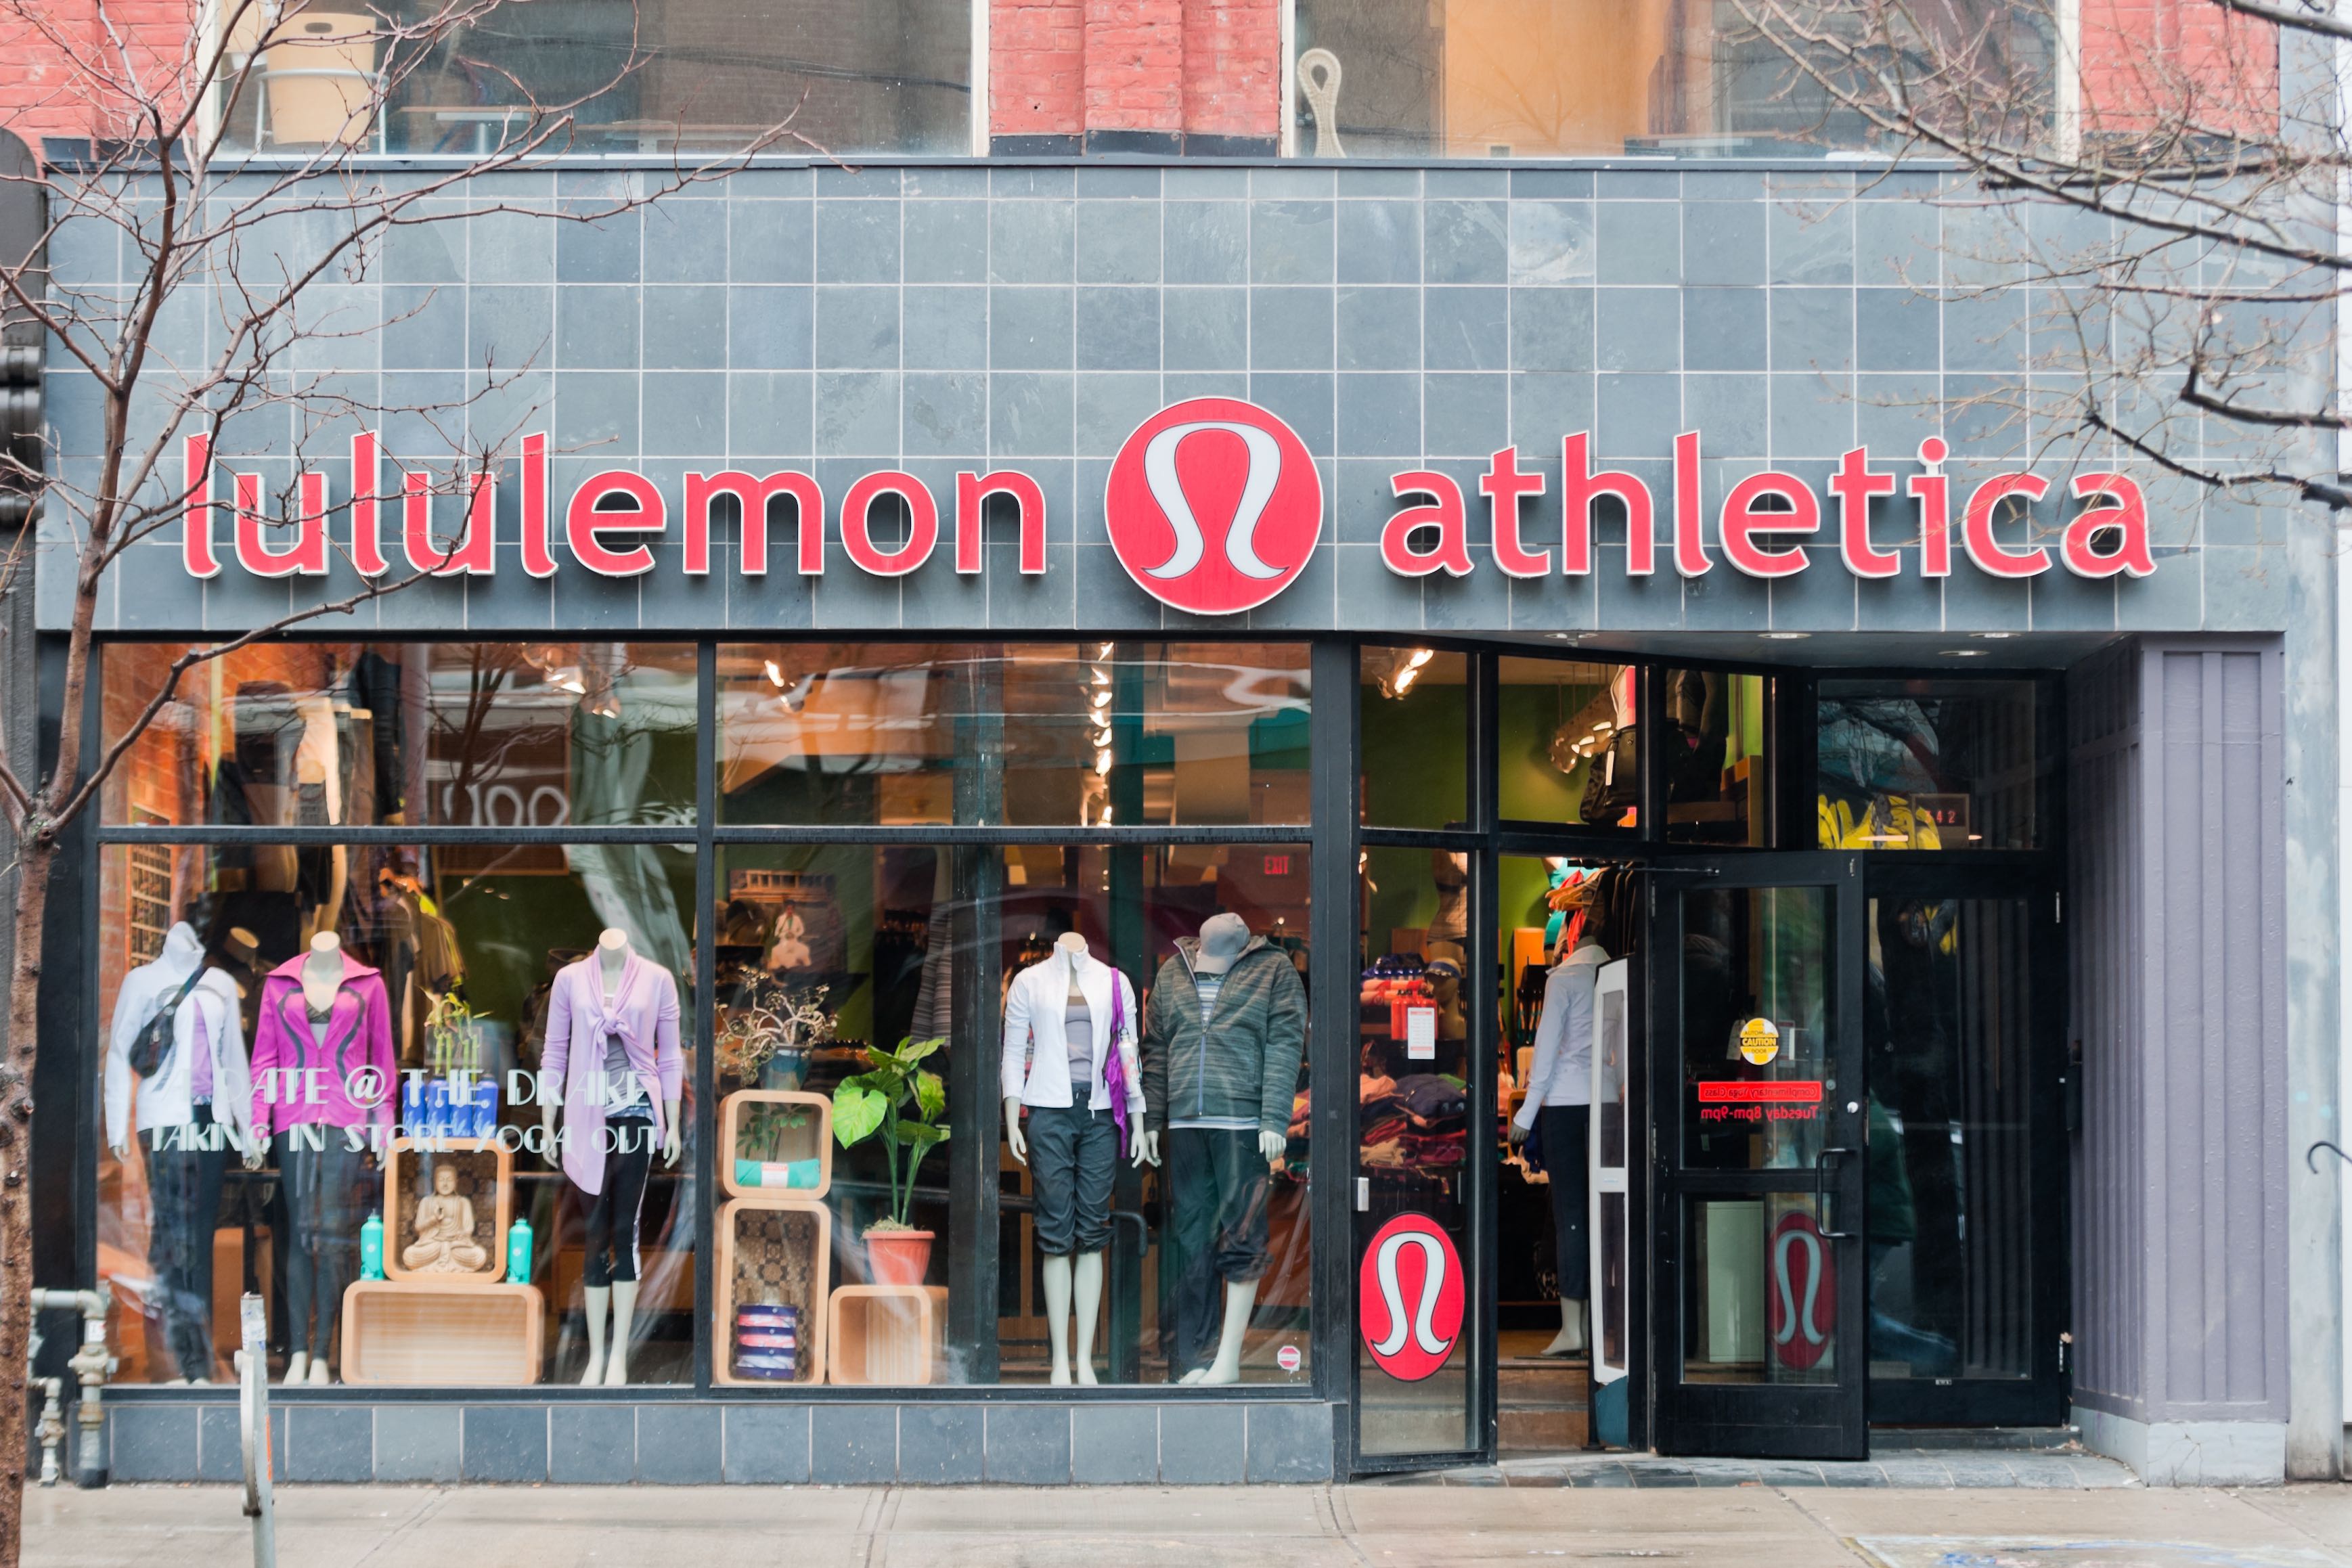 lululemon international stores